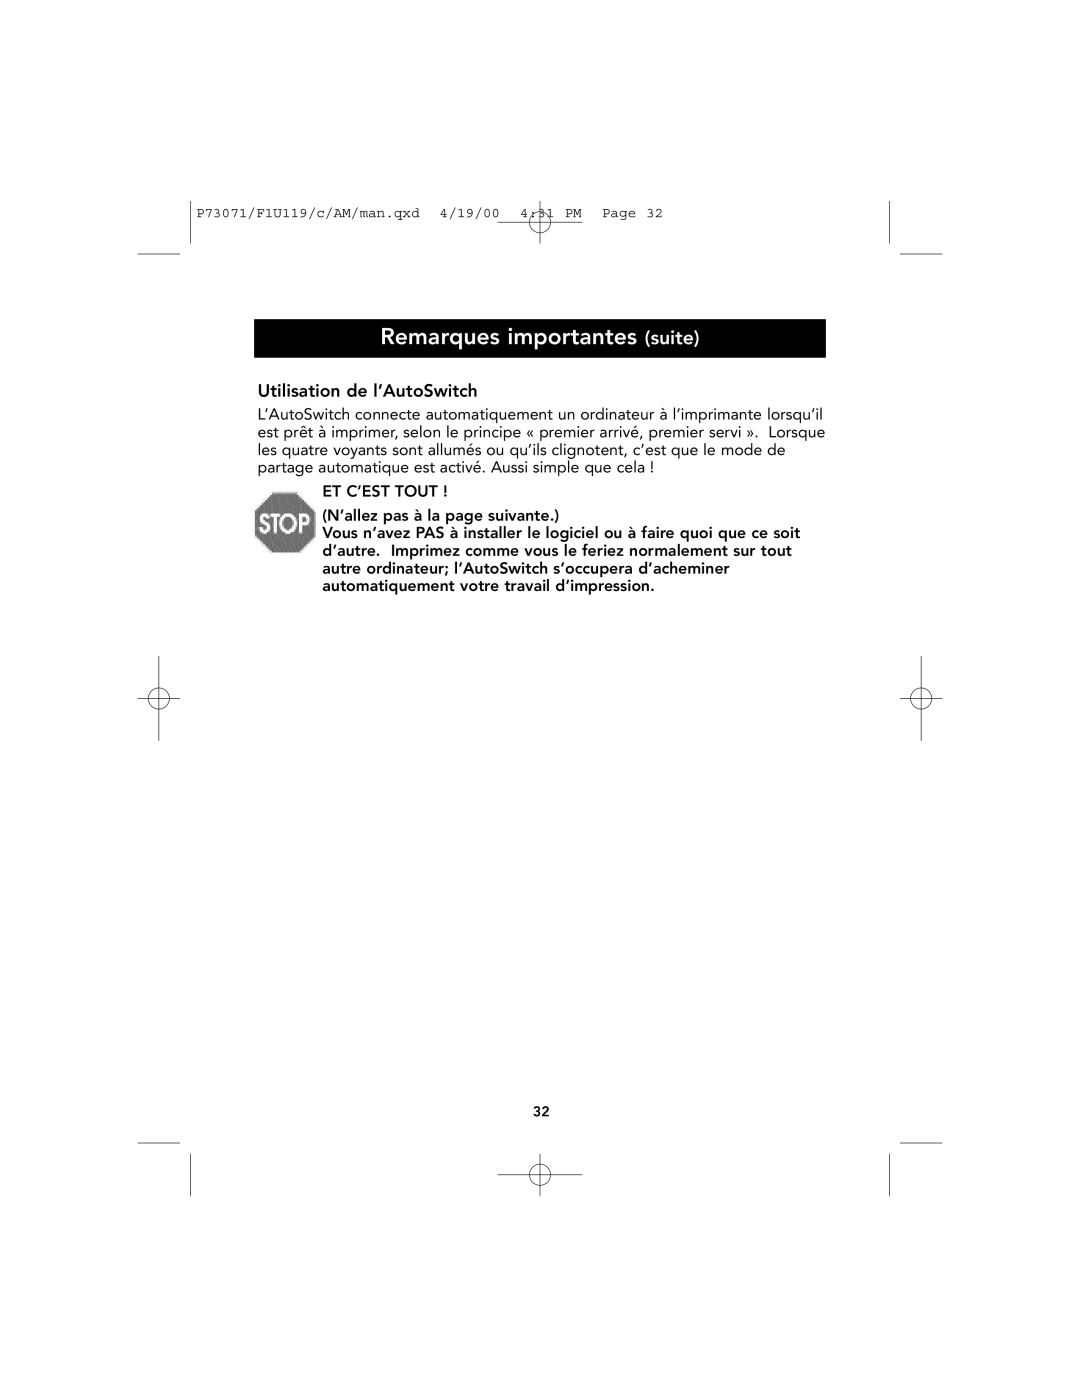 Belkin F1U119 user manual Remarques importantes suite, Utilisation de l’AutoSwitch 